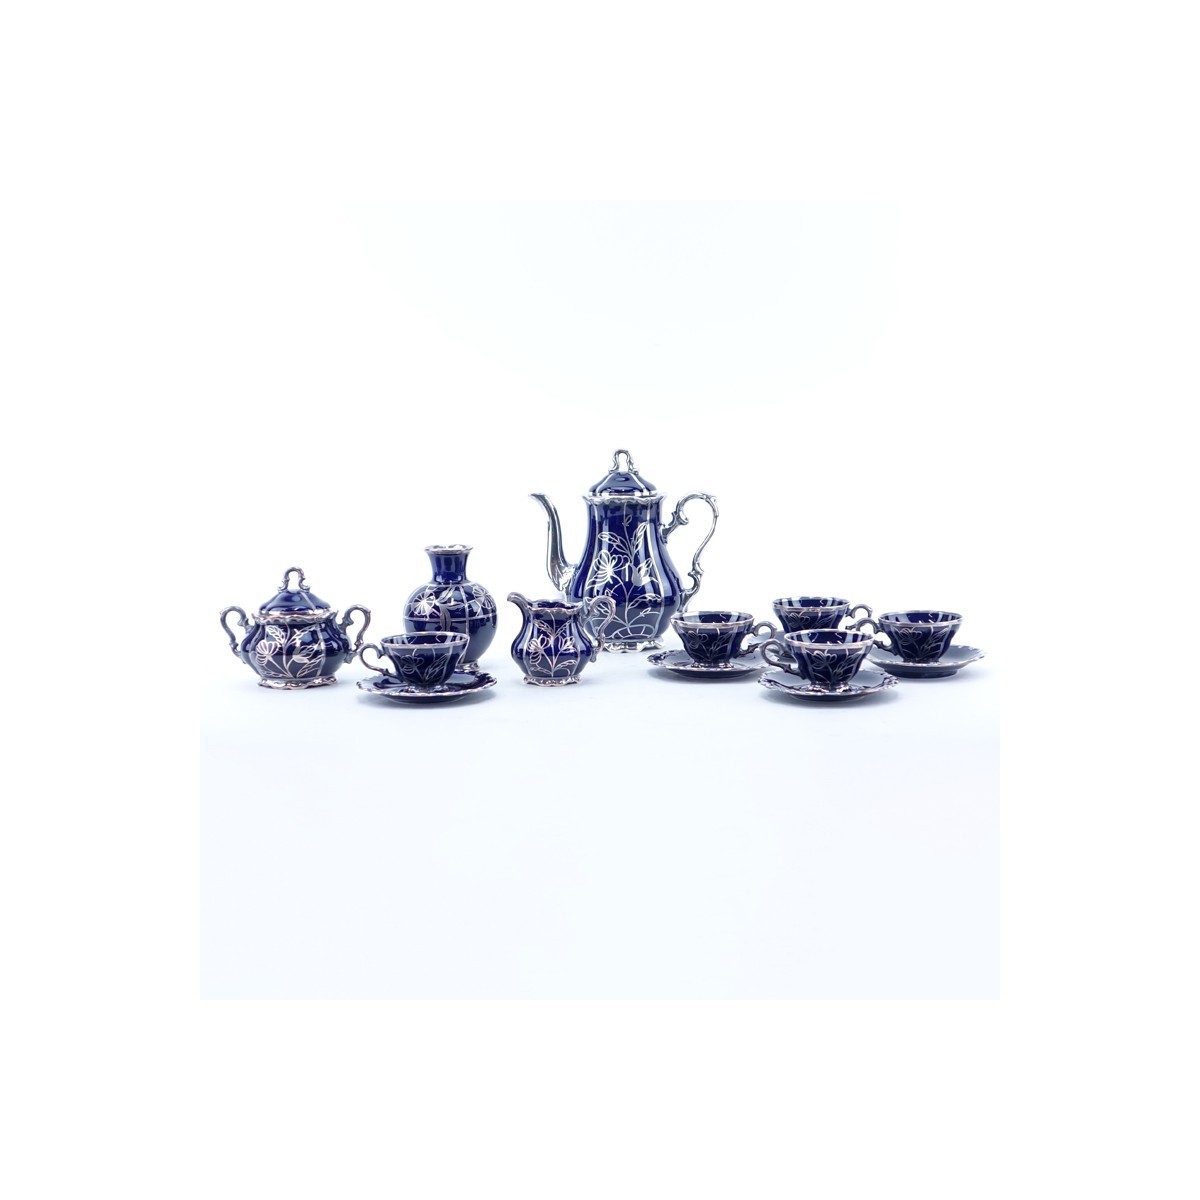 Thirteen (13) Piece German Cobalt Blue Porcelain and Pure Silver Tea Set. Includes: five cups, four saucers, creamer, covered sugar, vase, and tea pot.